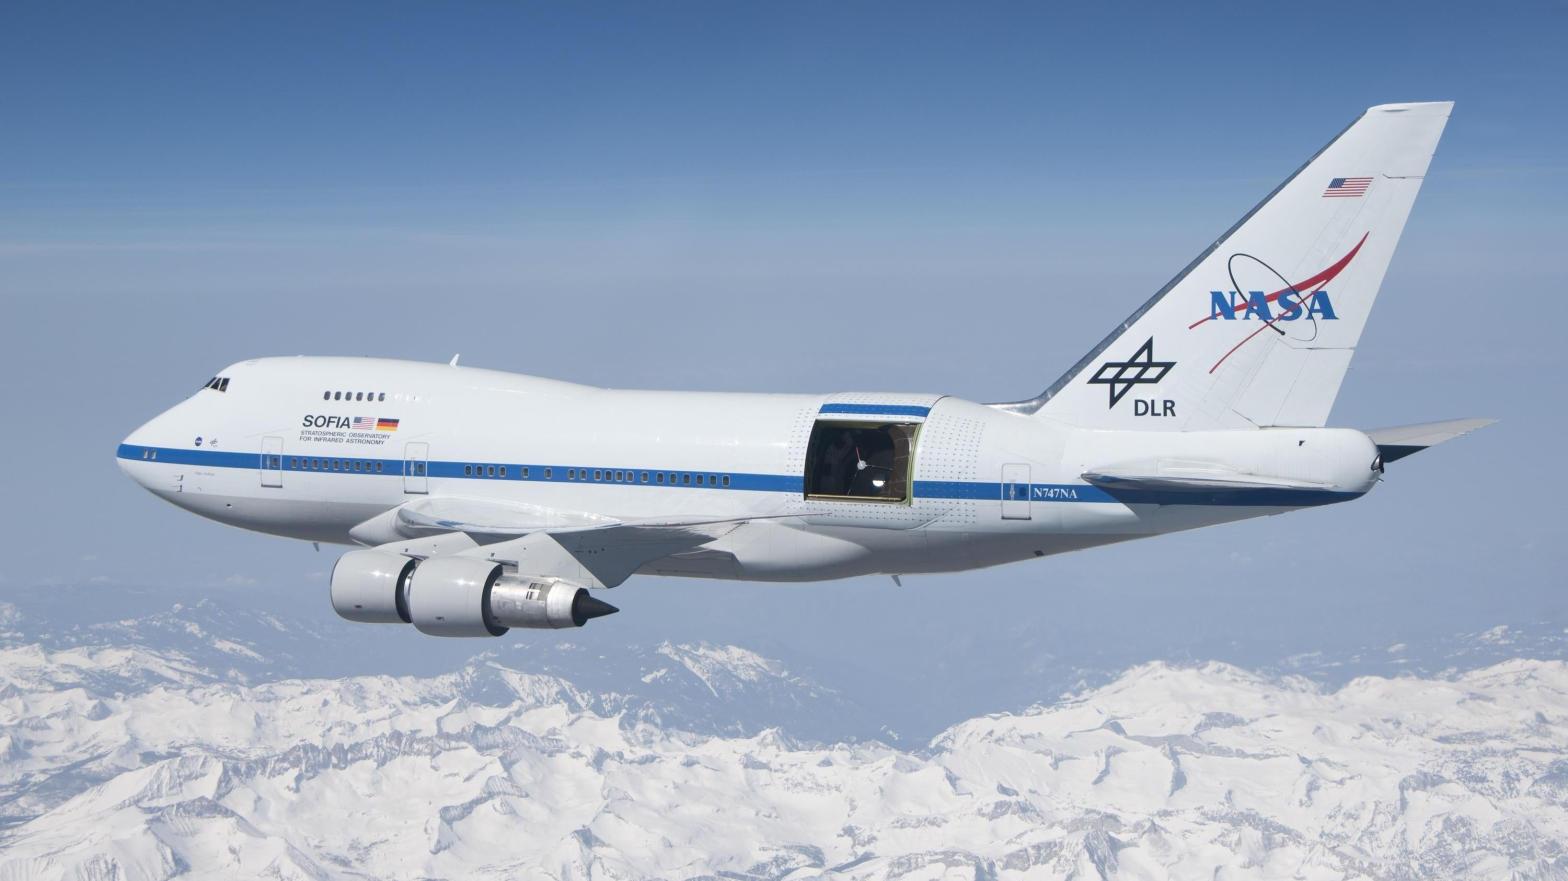 The aircraft will take its final flight on December 13. (Photo: NASA)